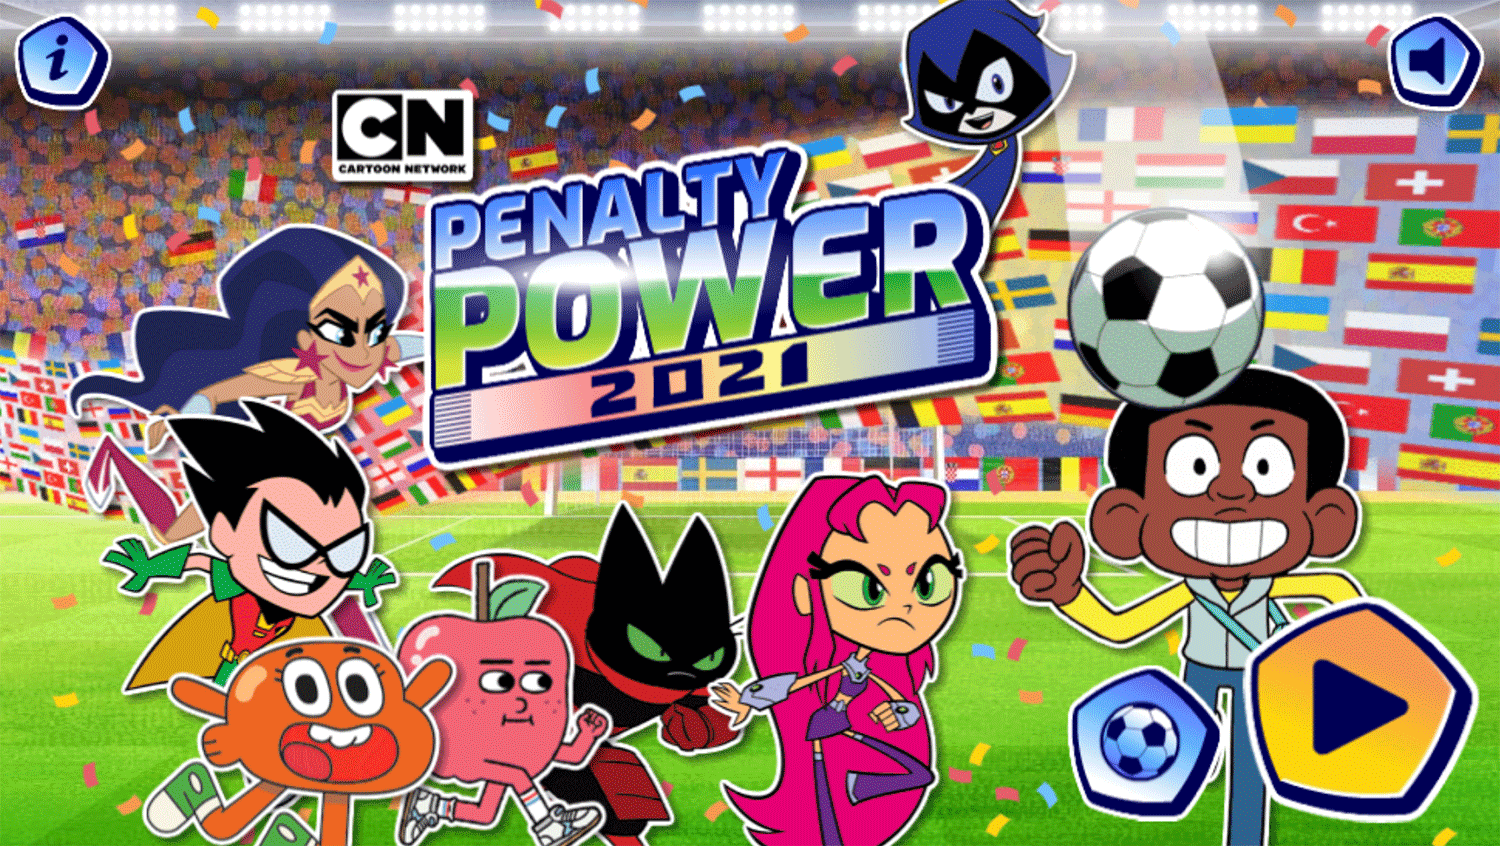 Penalty Power 2021 Game Welcome Screen Screenshot.